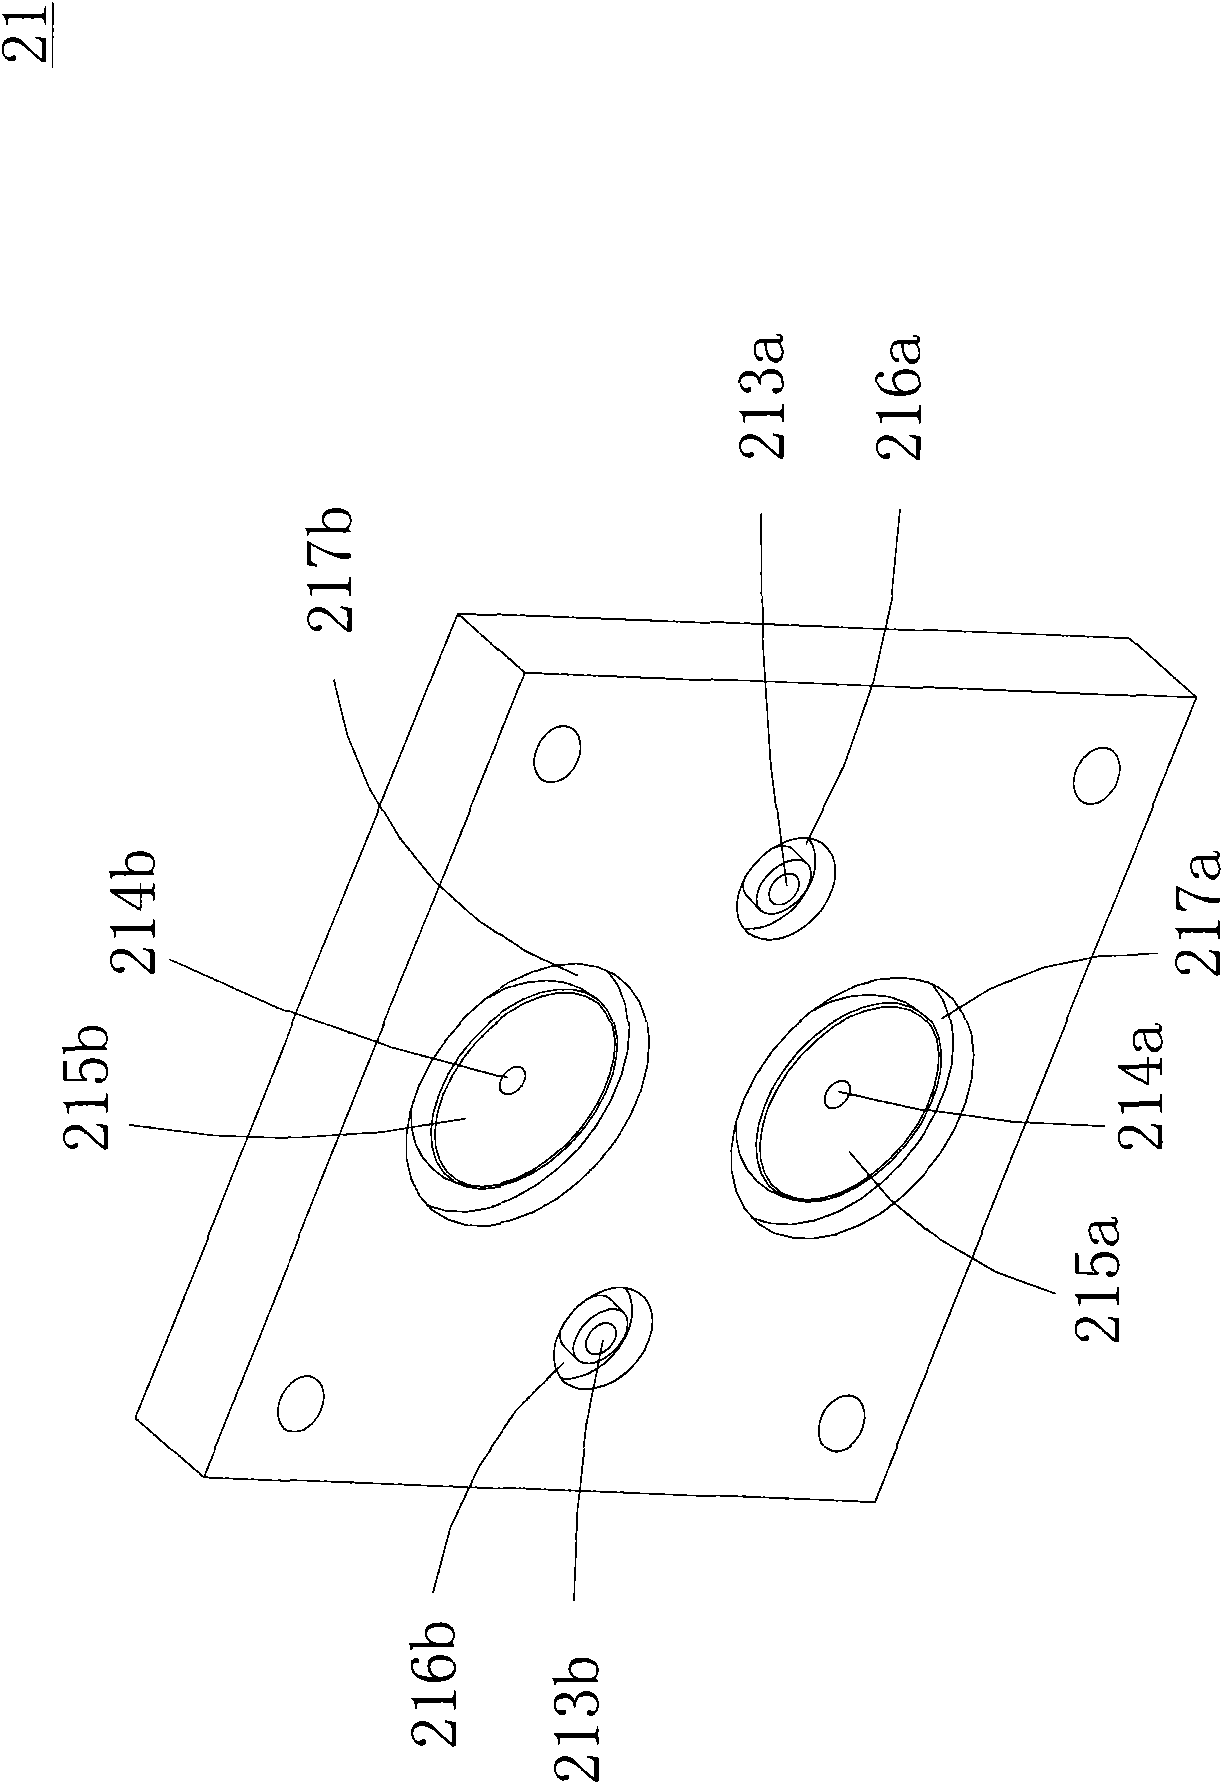 Multiple-sprue fluid conveying appliance